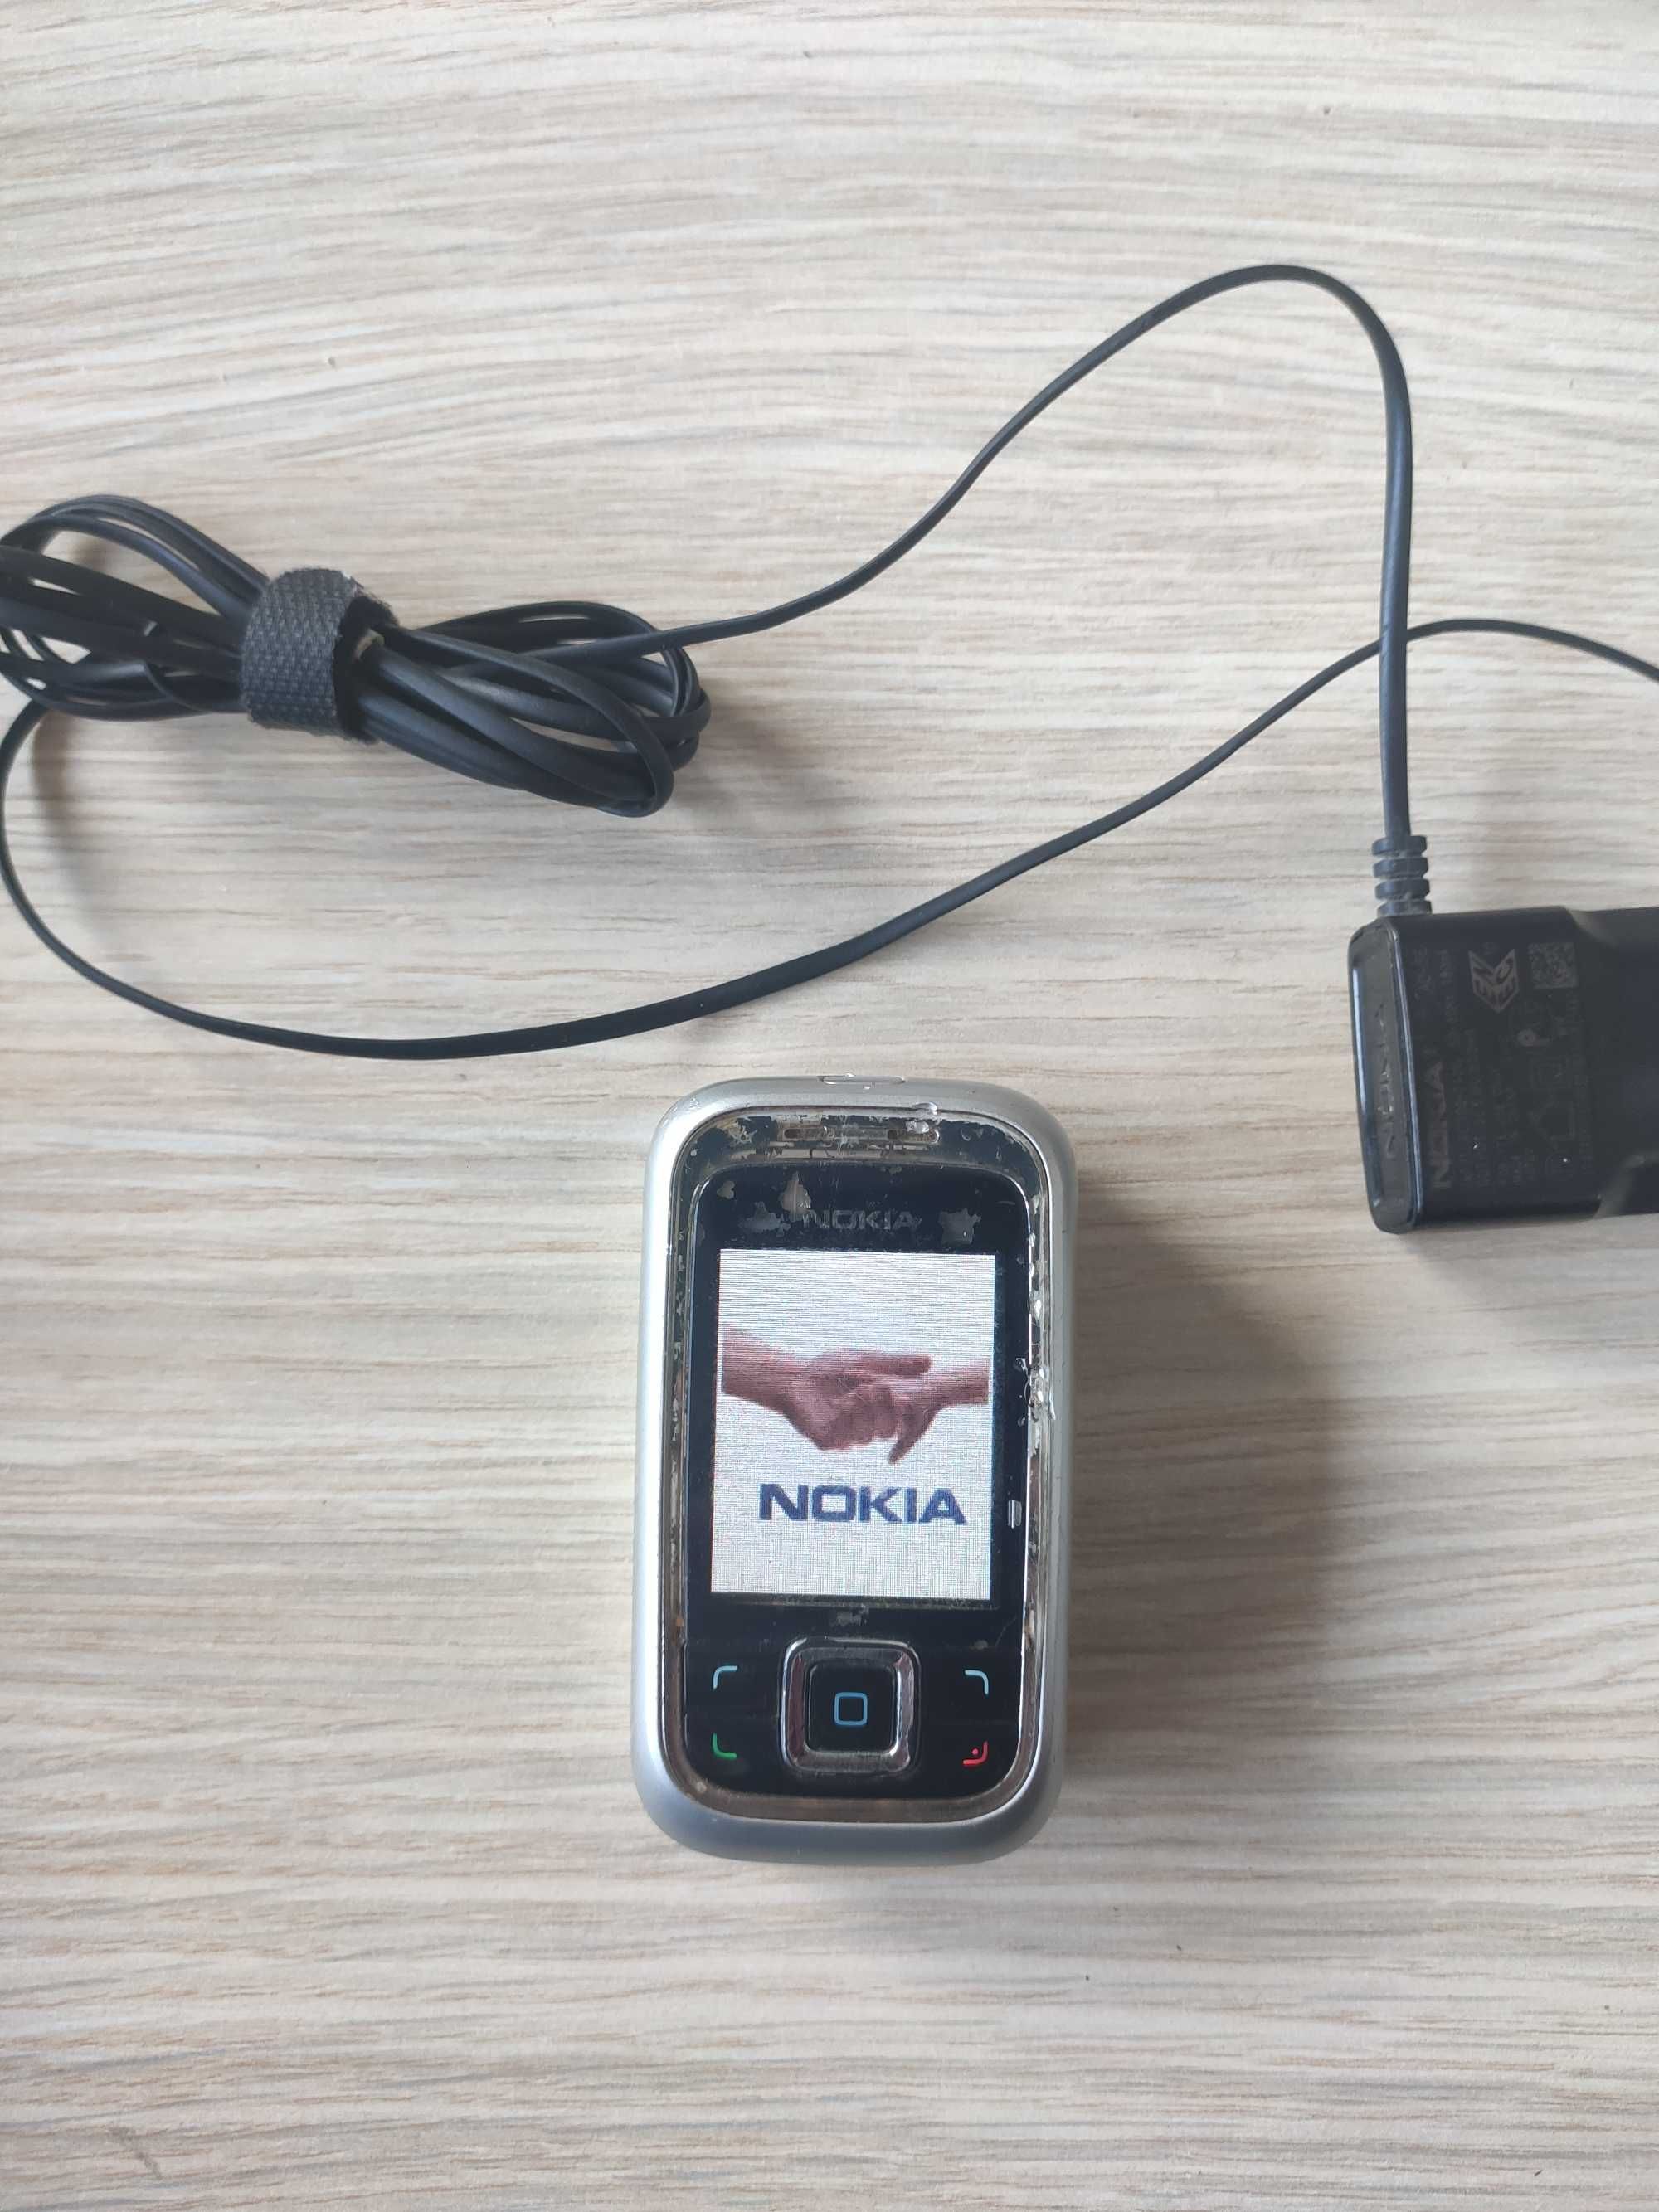 Nokia 6111 cu butoane retro